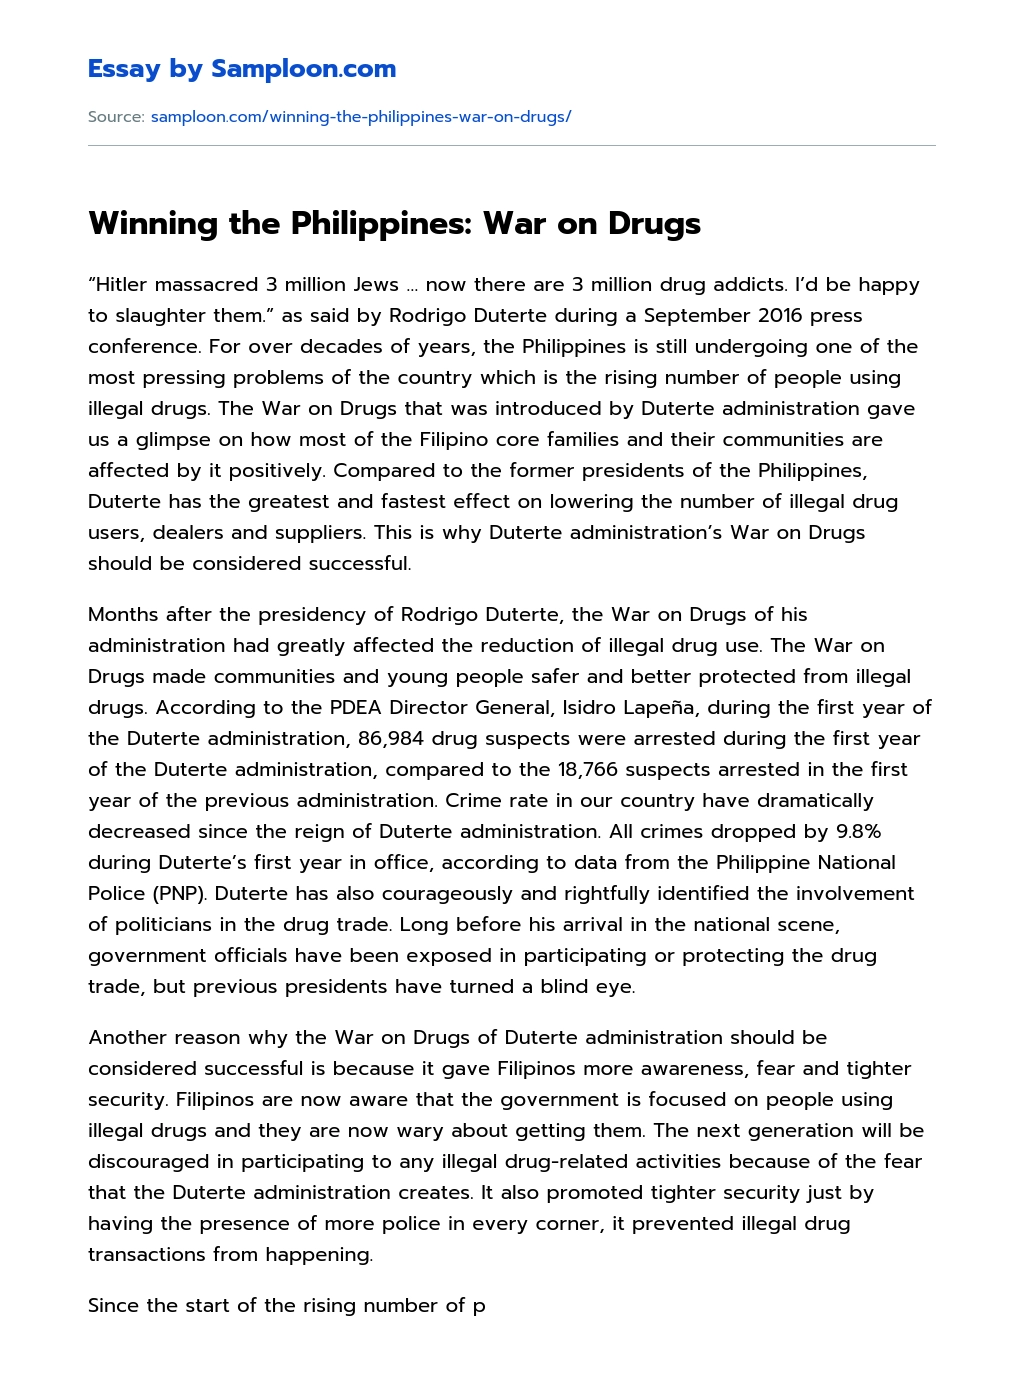 Winning the Philippines: War on Drugs essay